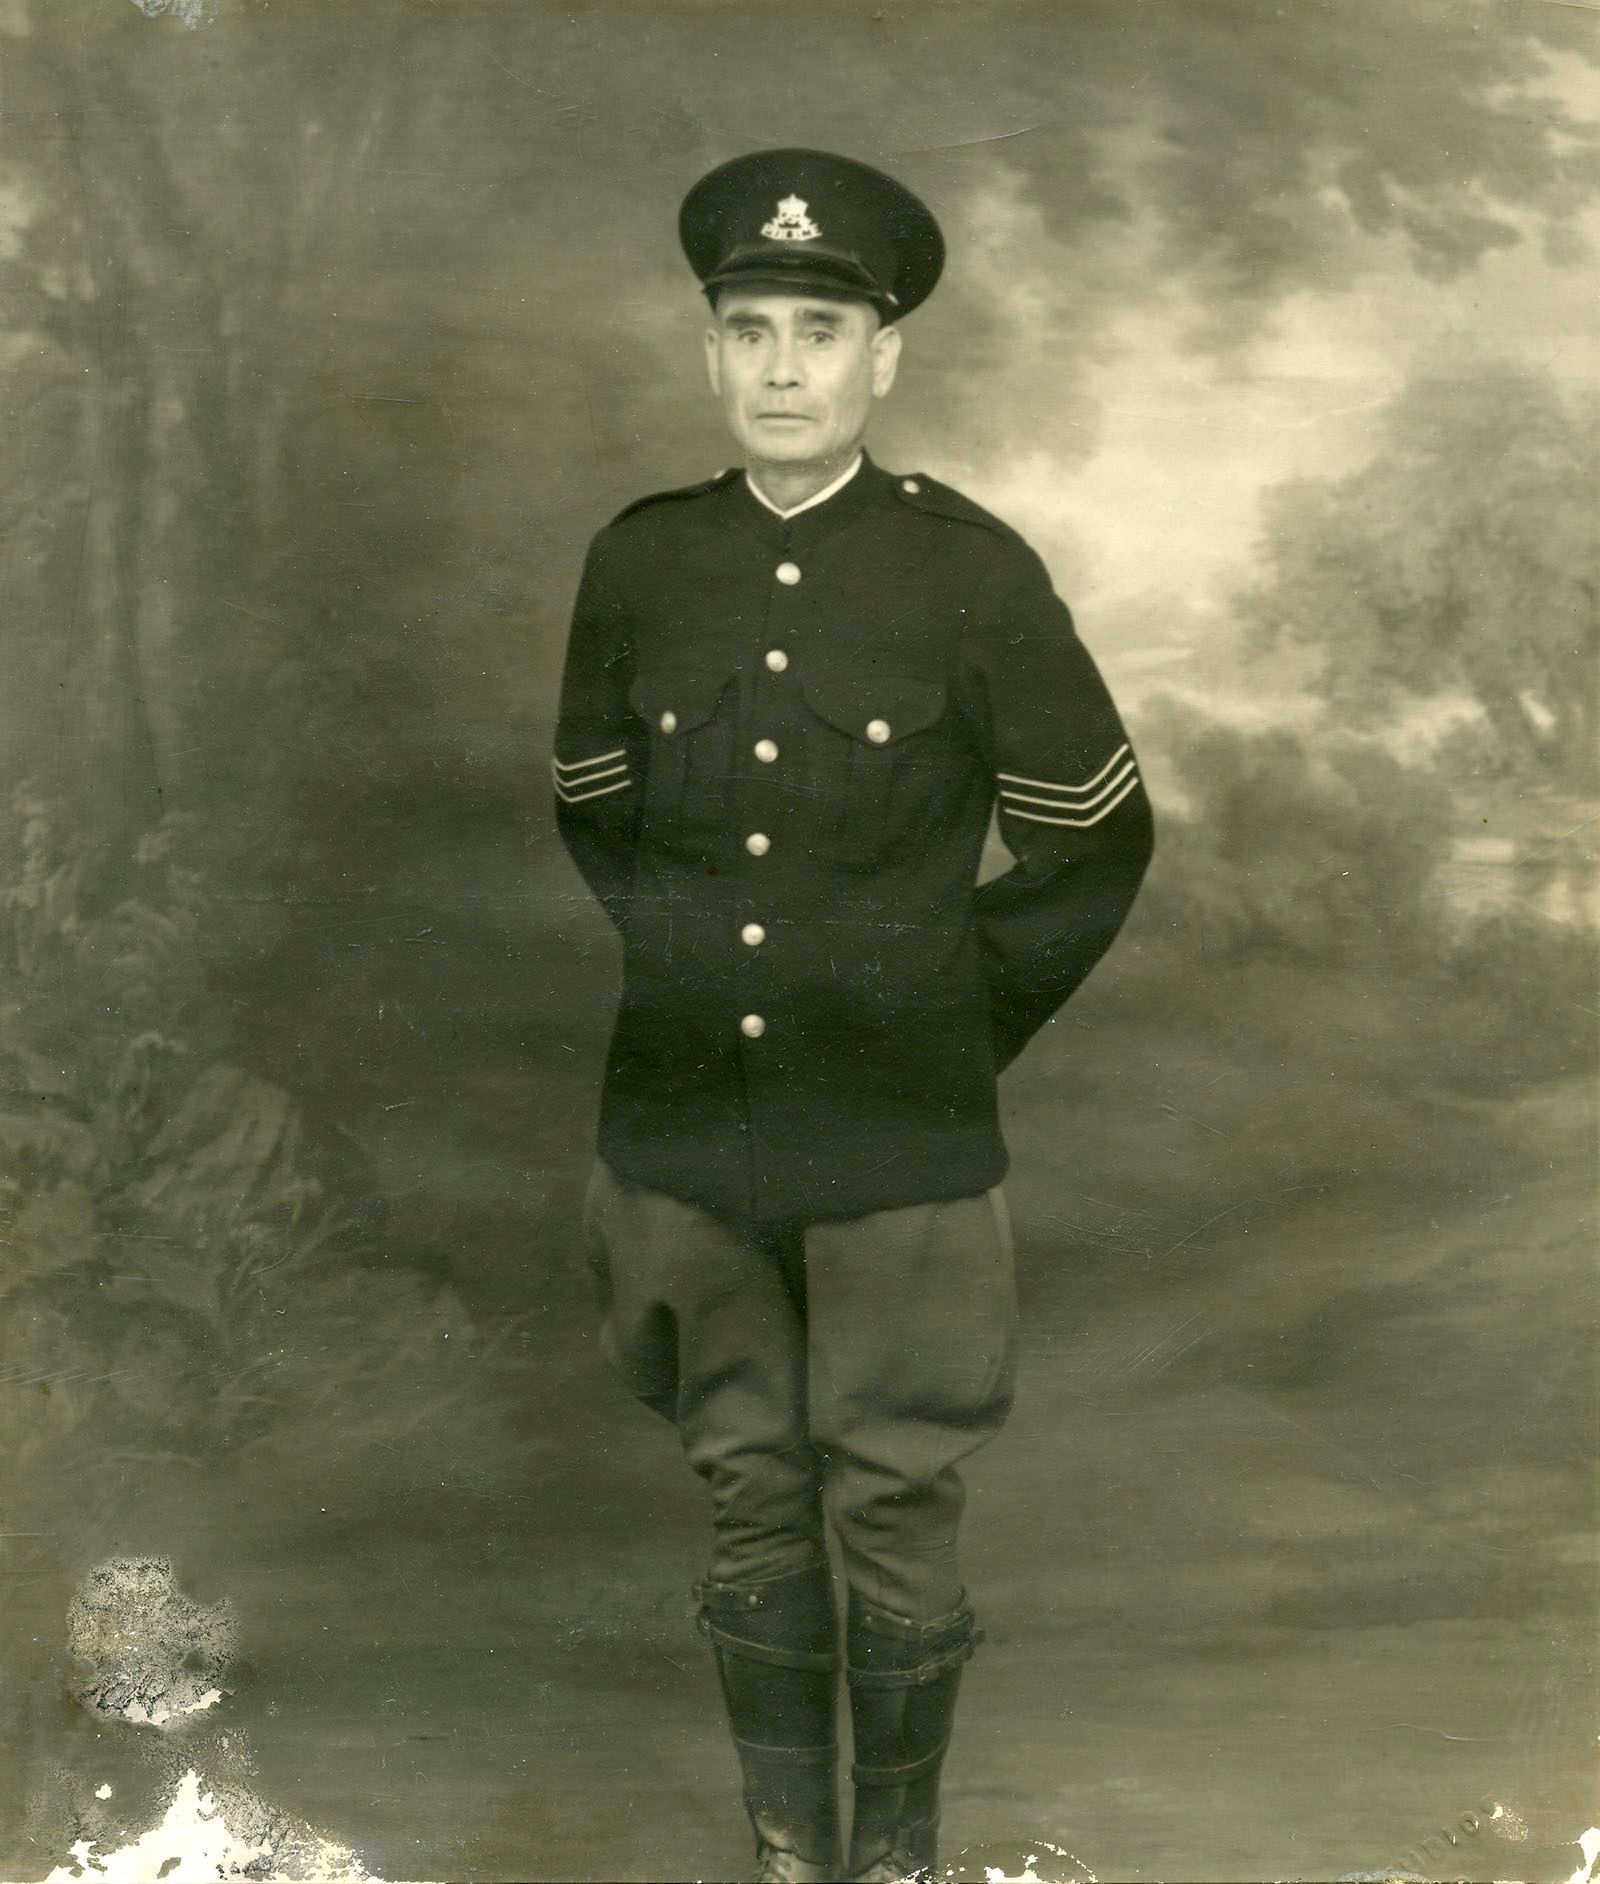 Sergeant Tracker Alexander ‘Alec’ Riley wearing his police uniform